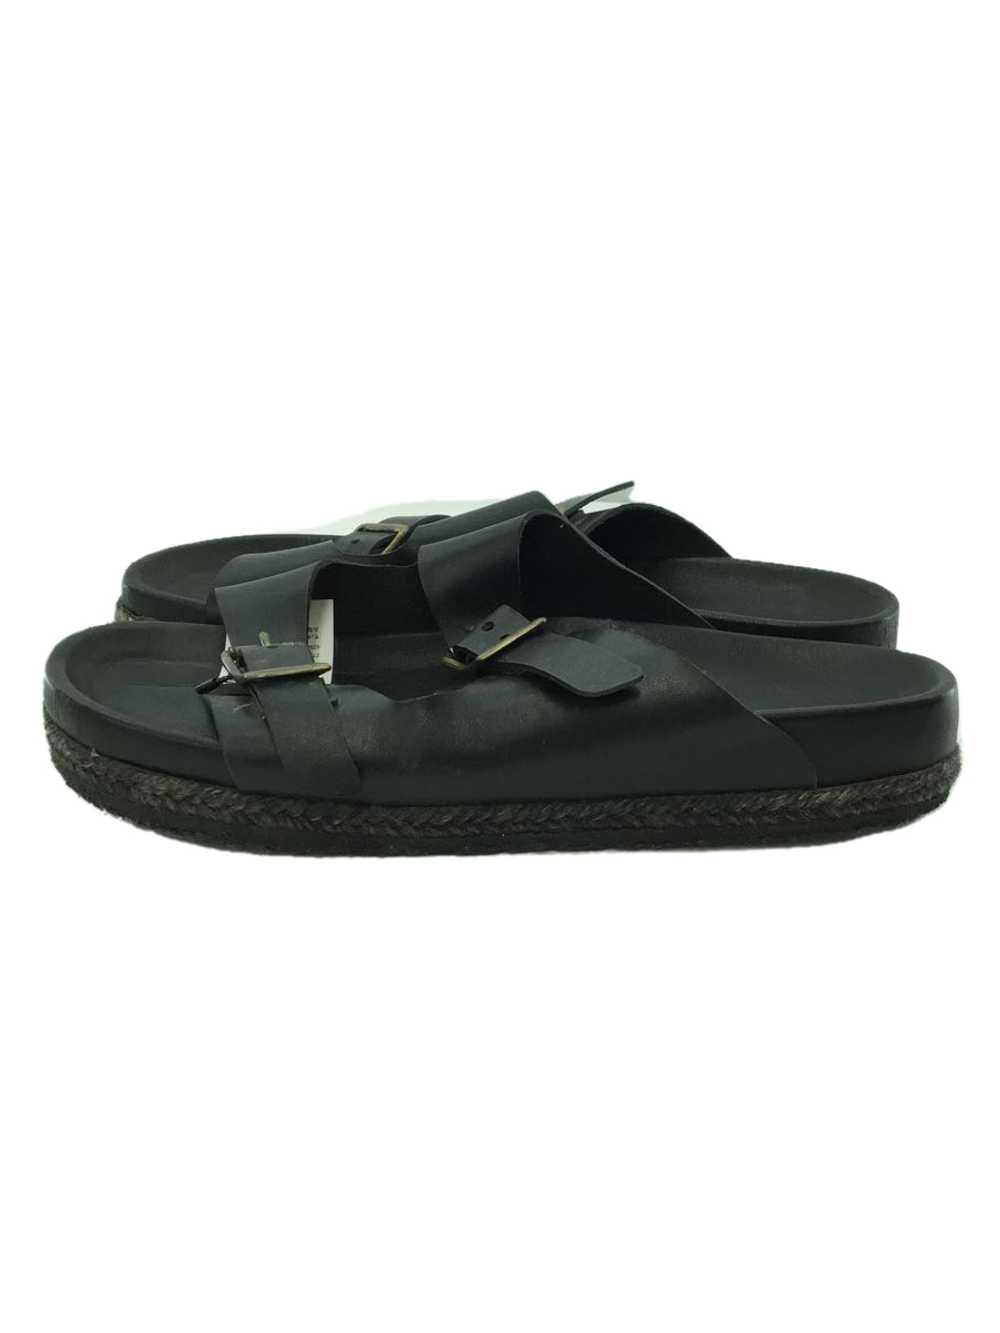 Yuketen Sandals/41/Black/Leather Shoes BUc30 - image 1